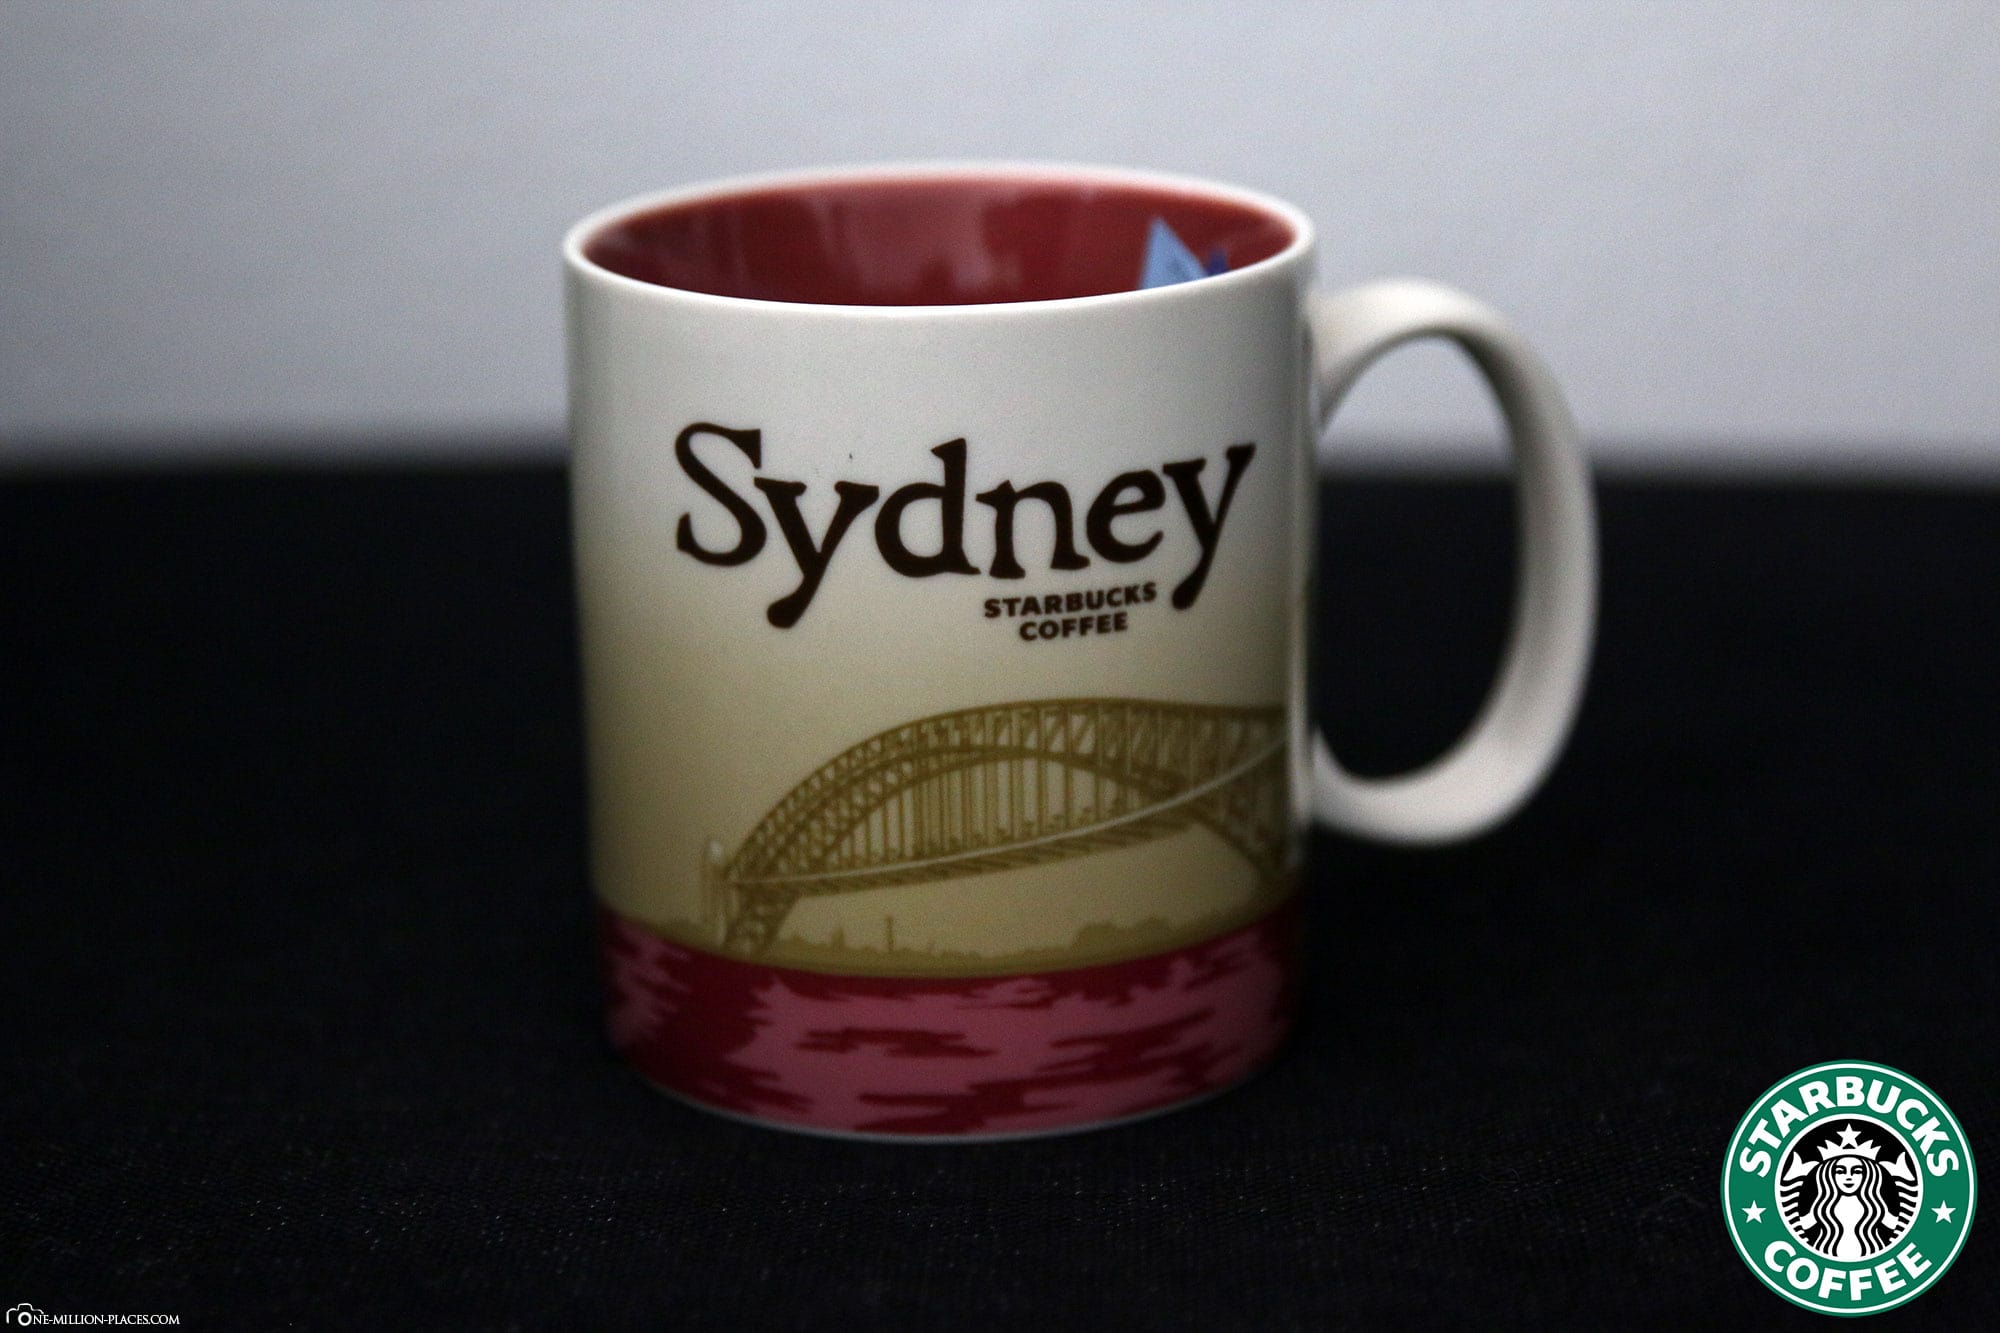 Sydney, Starbucks Cup, Global Icon Series, City Mugs, Collection, Australia, Travelreport